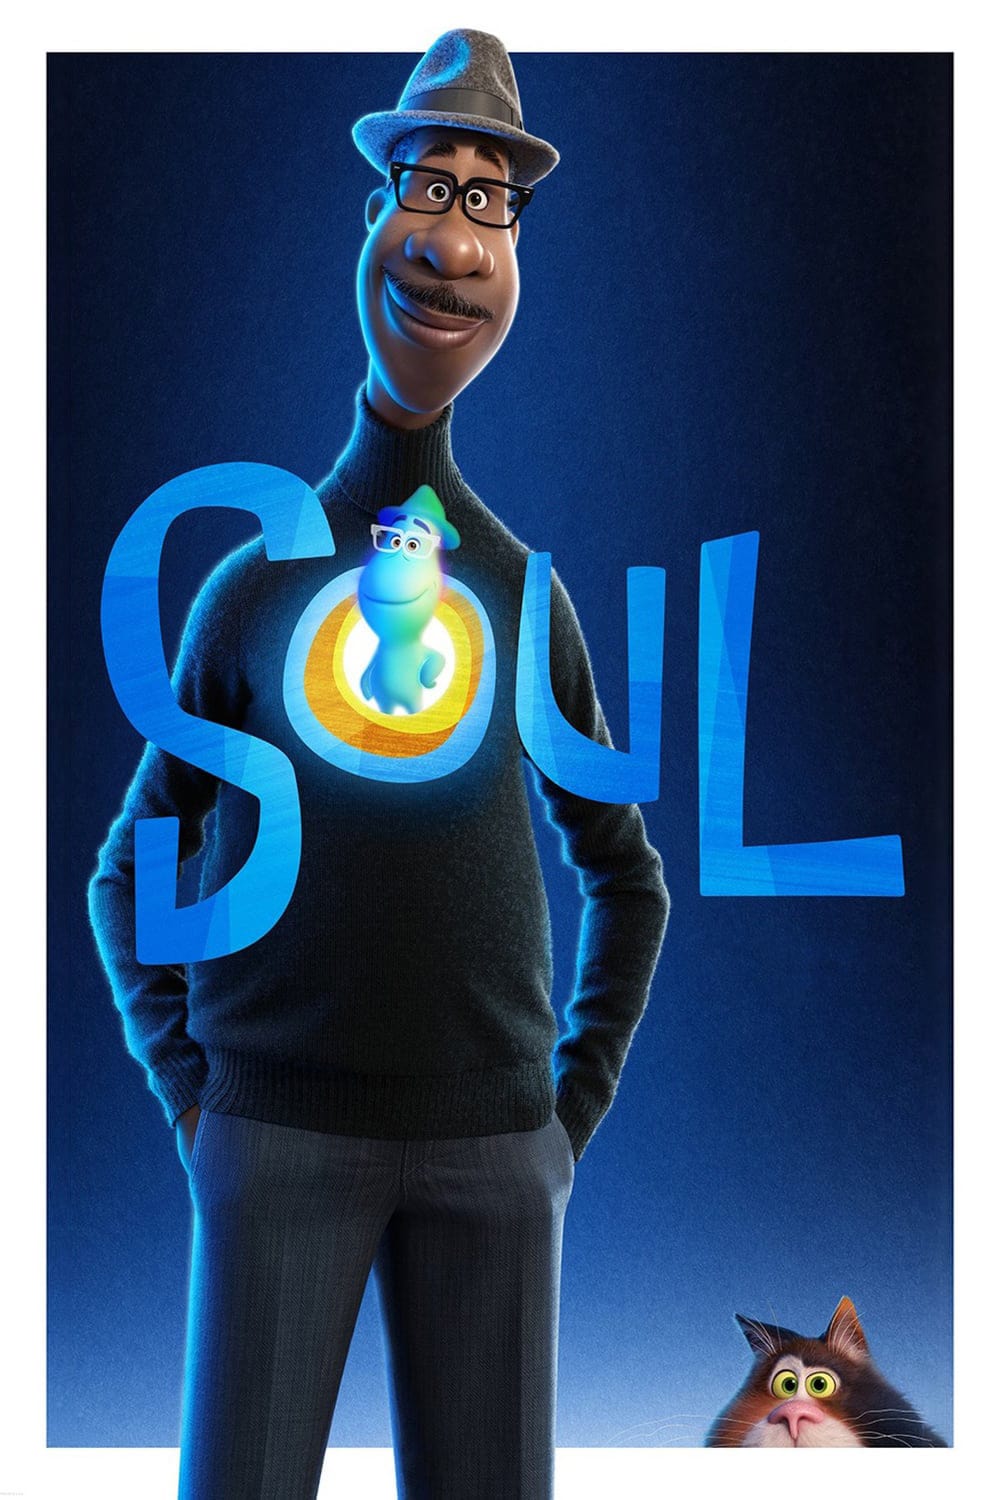 Soul poster